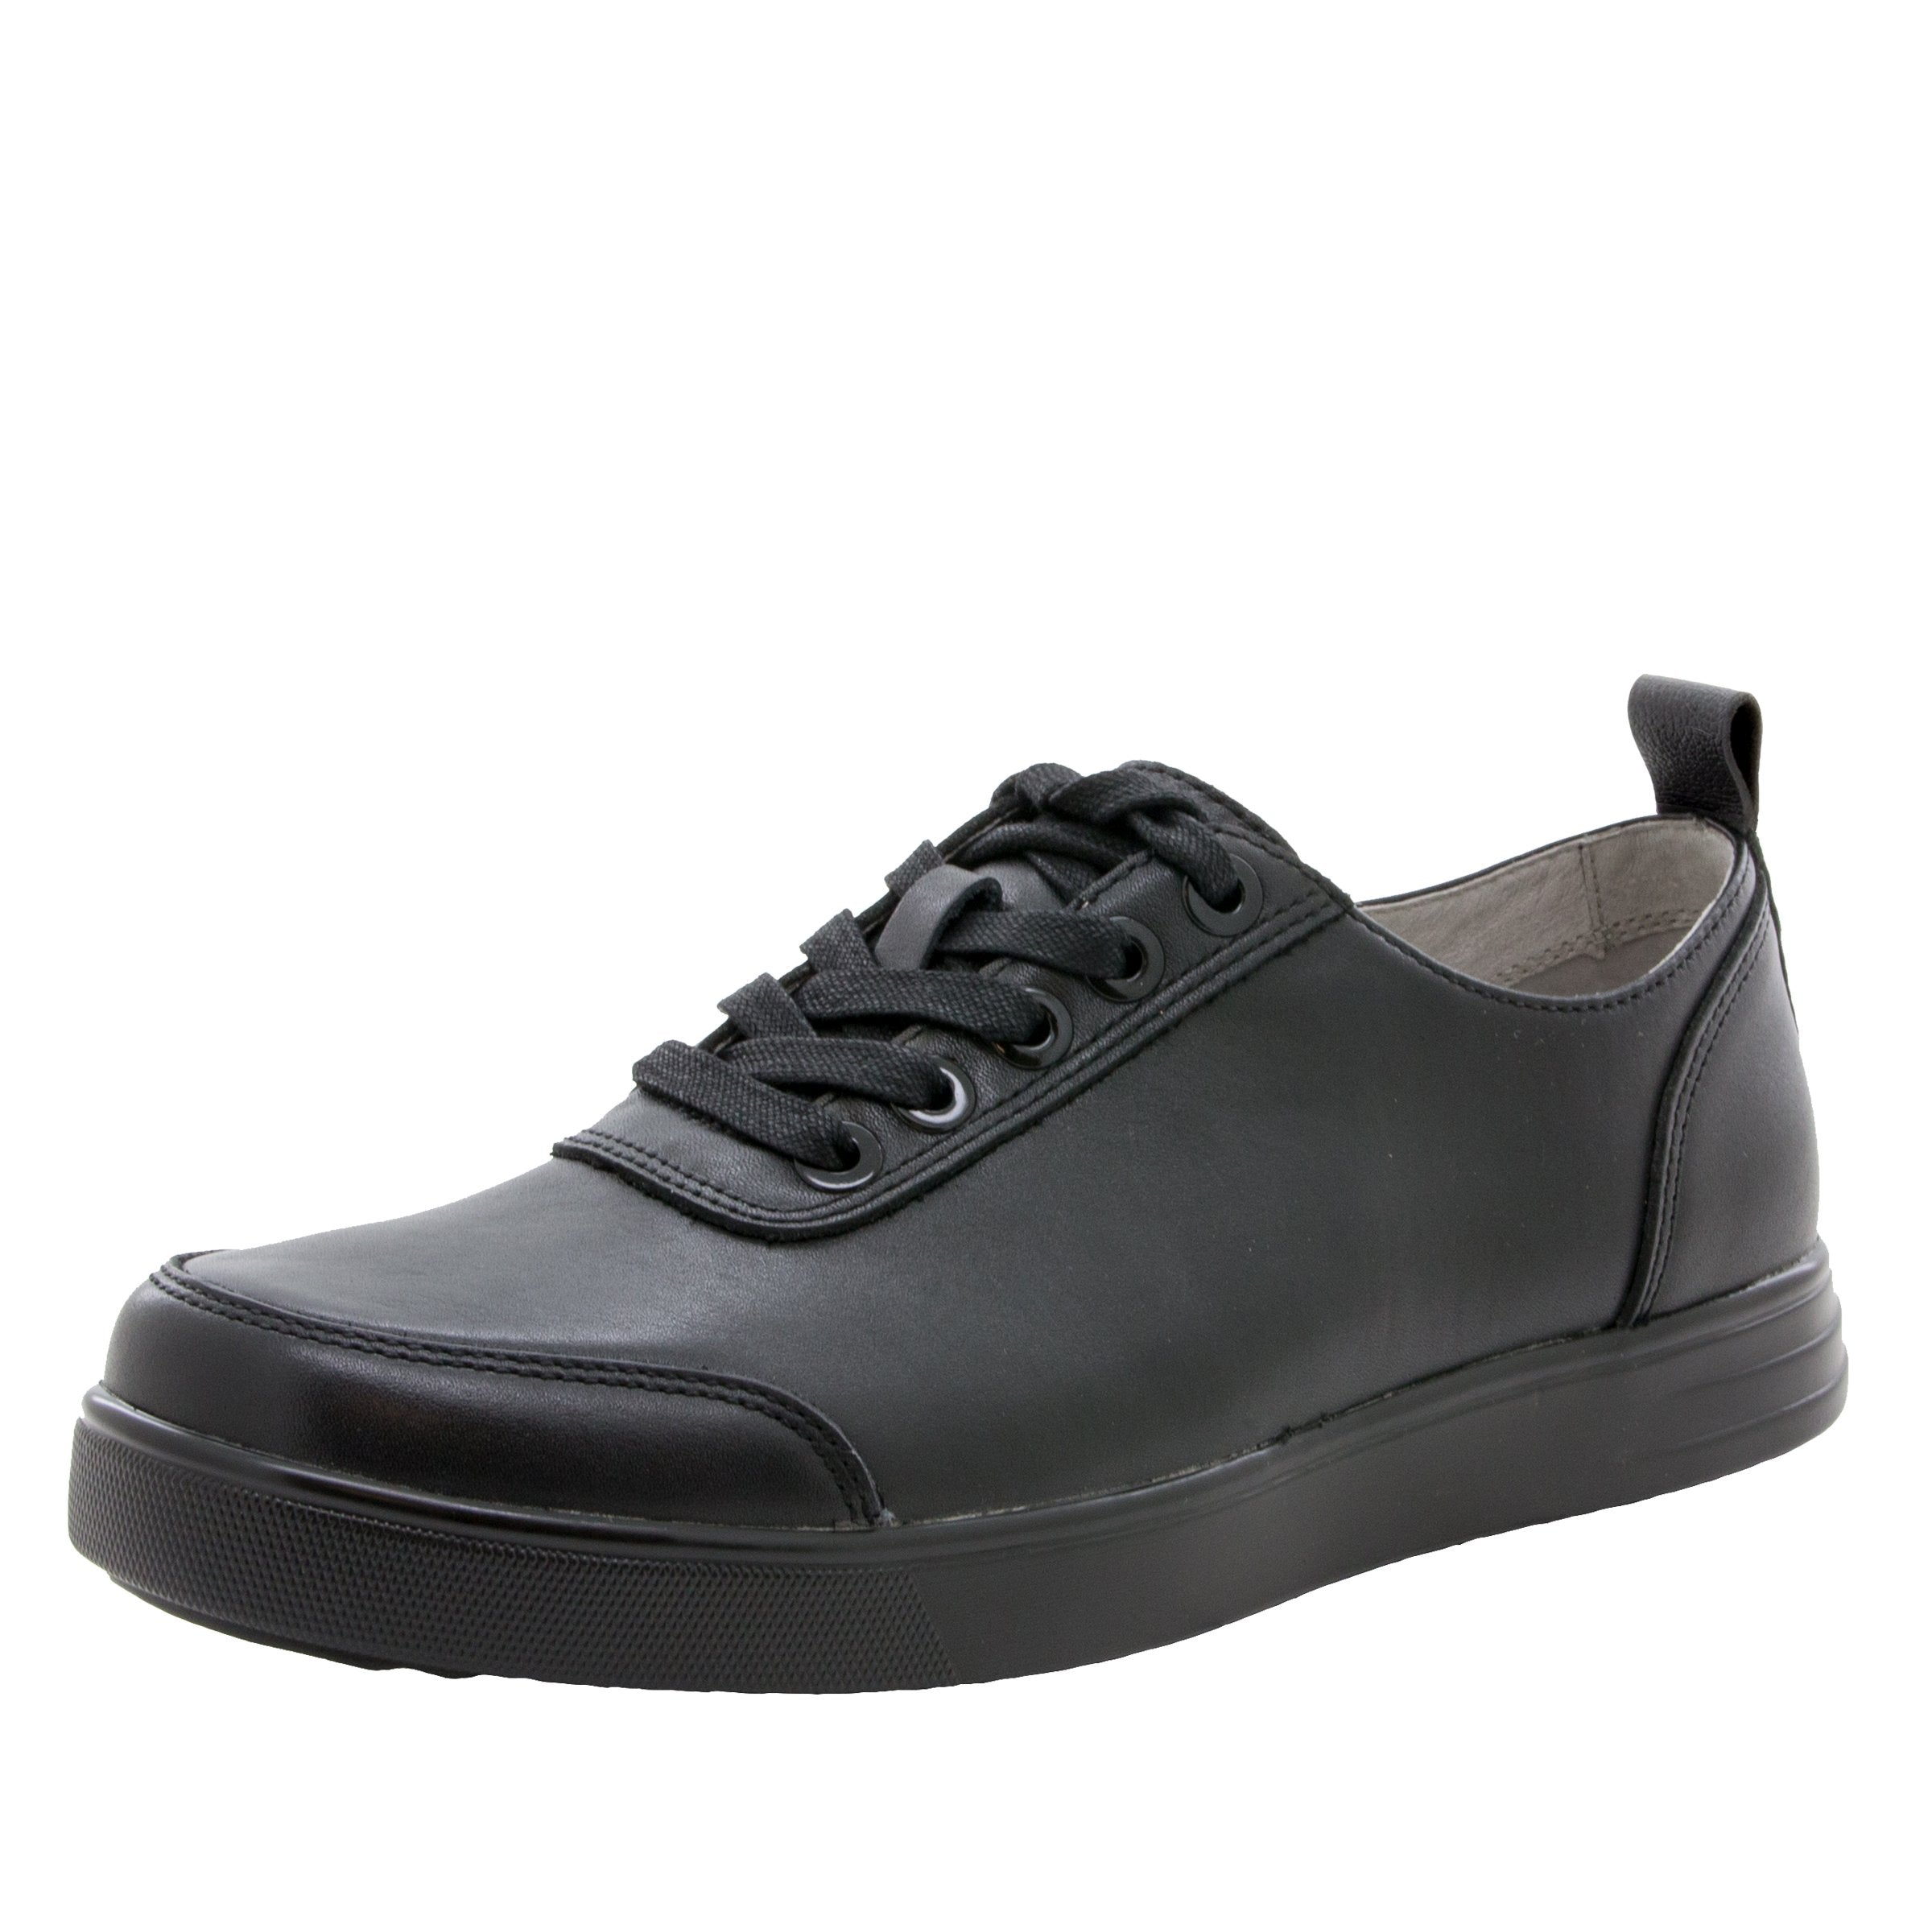 Alegria Men's Stretcher Casual Shoes Black Tumbled